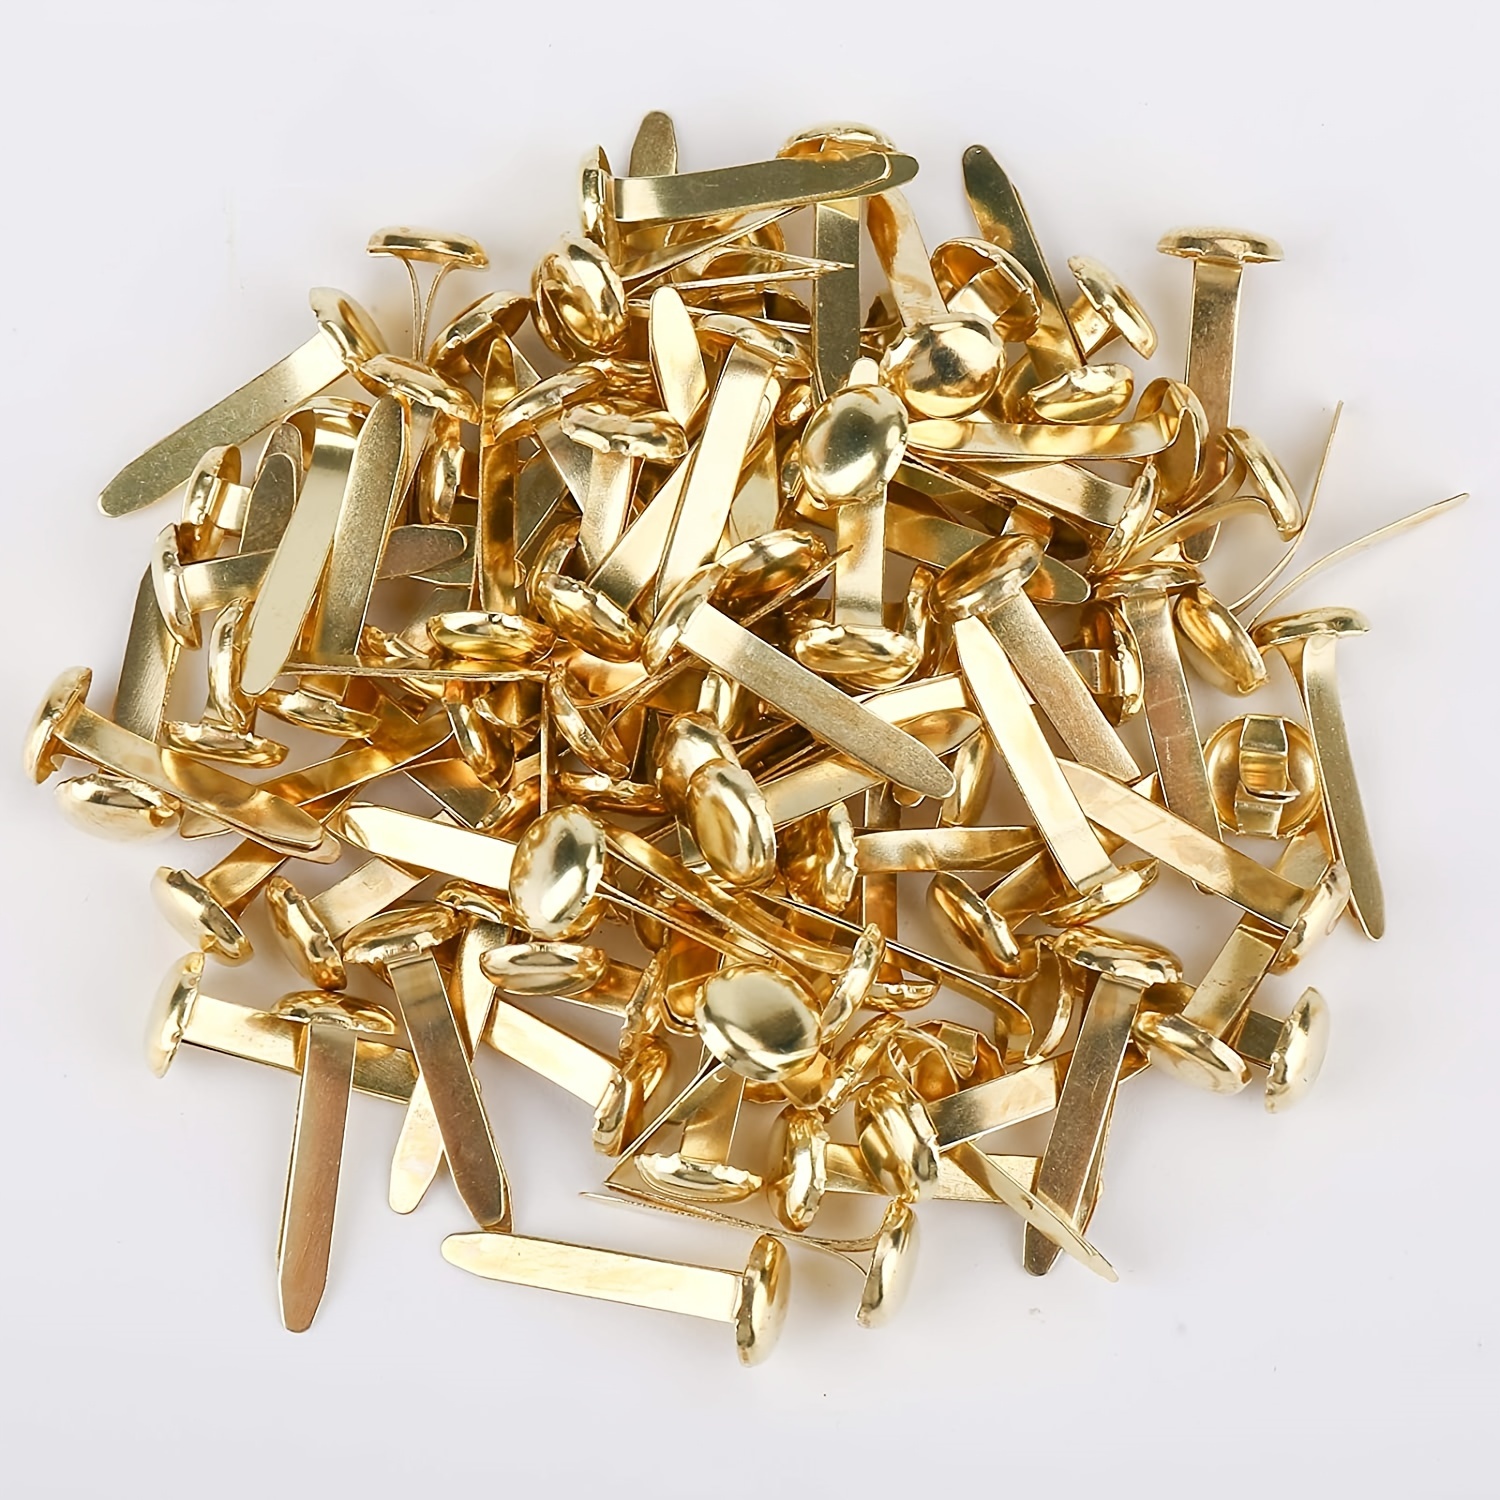 100PCS Brads Paper Fasteners Brass Brads Round Fasteners Mini Metal Brads  for